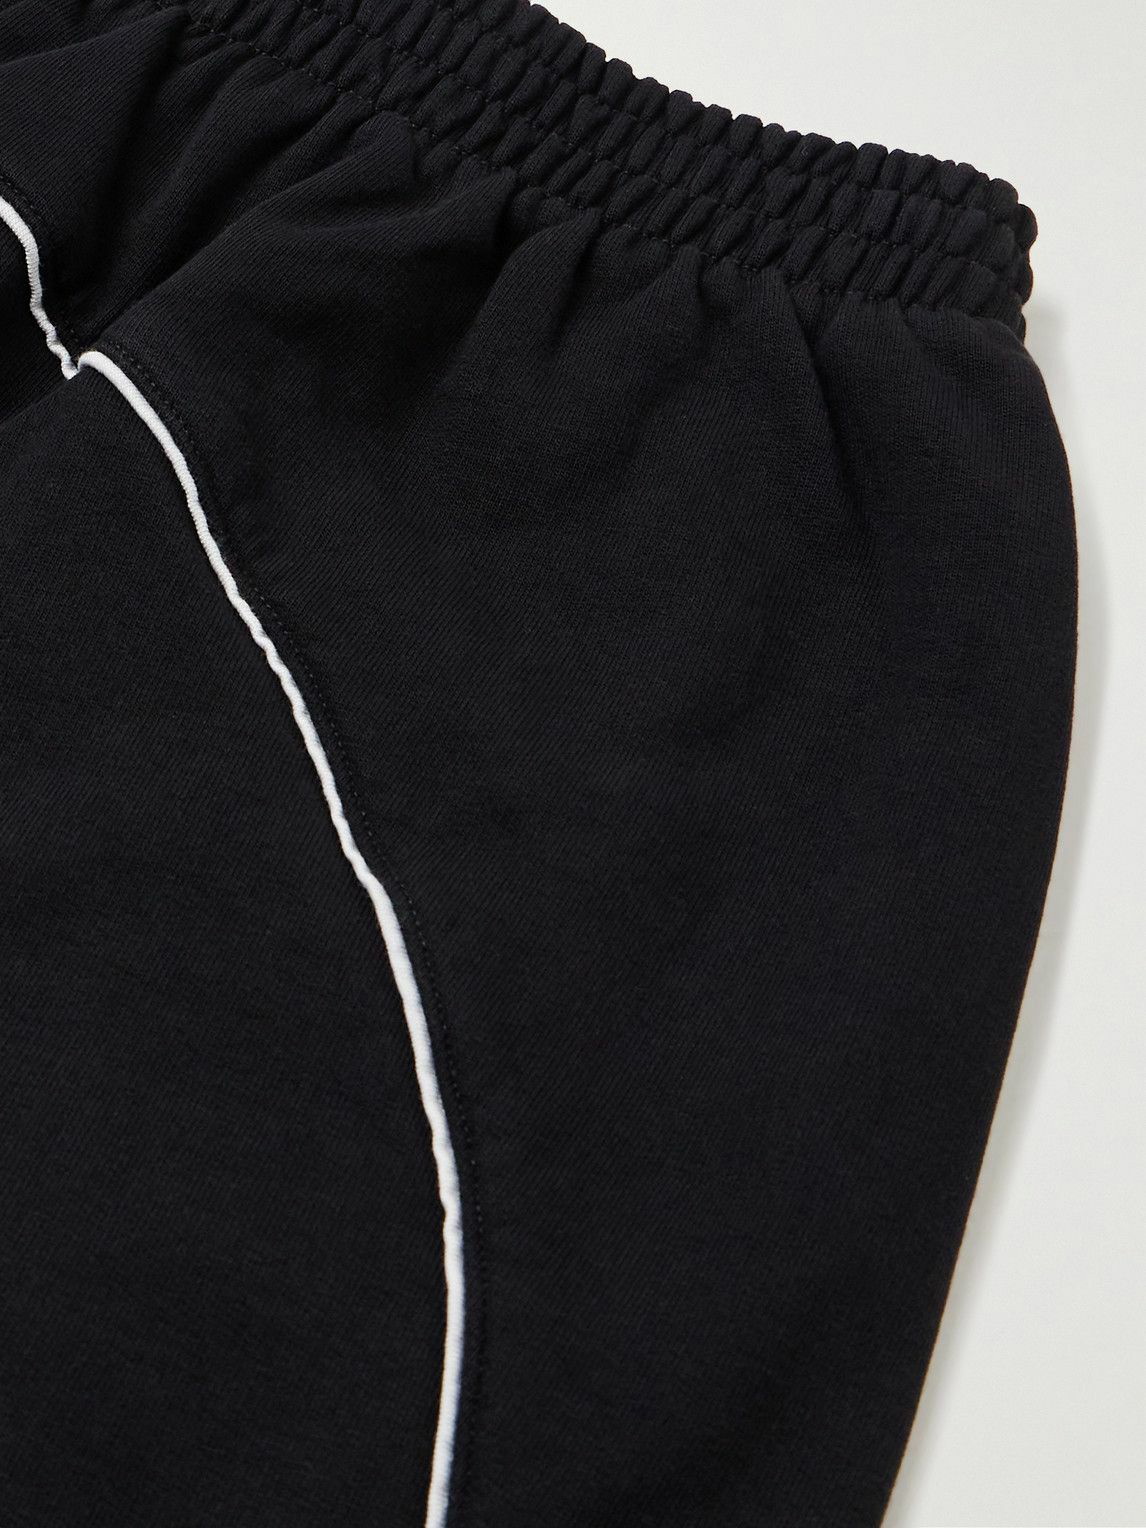 Flared sweatpants in black - Balenciaga